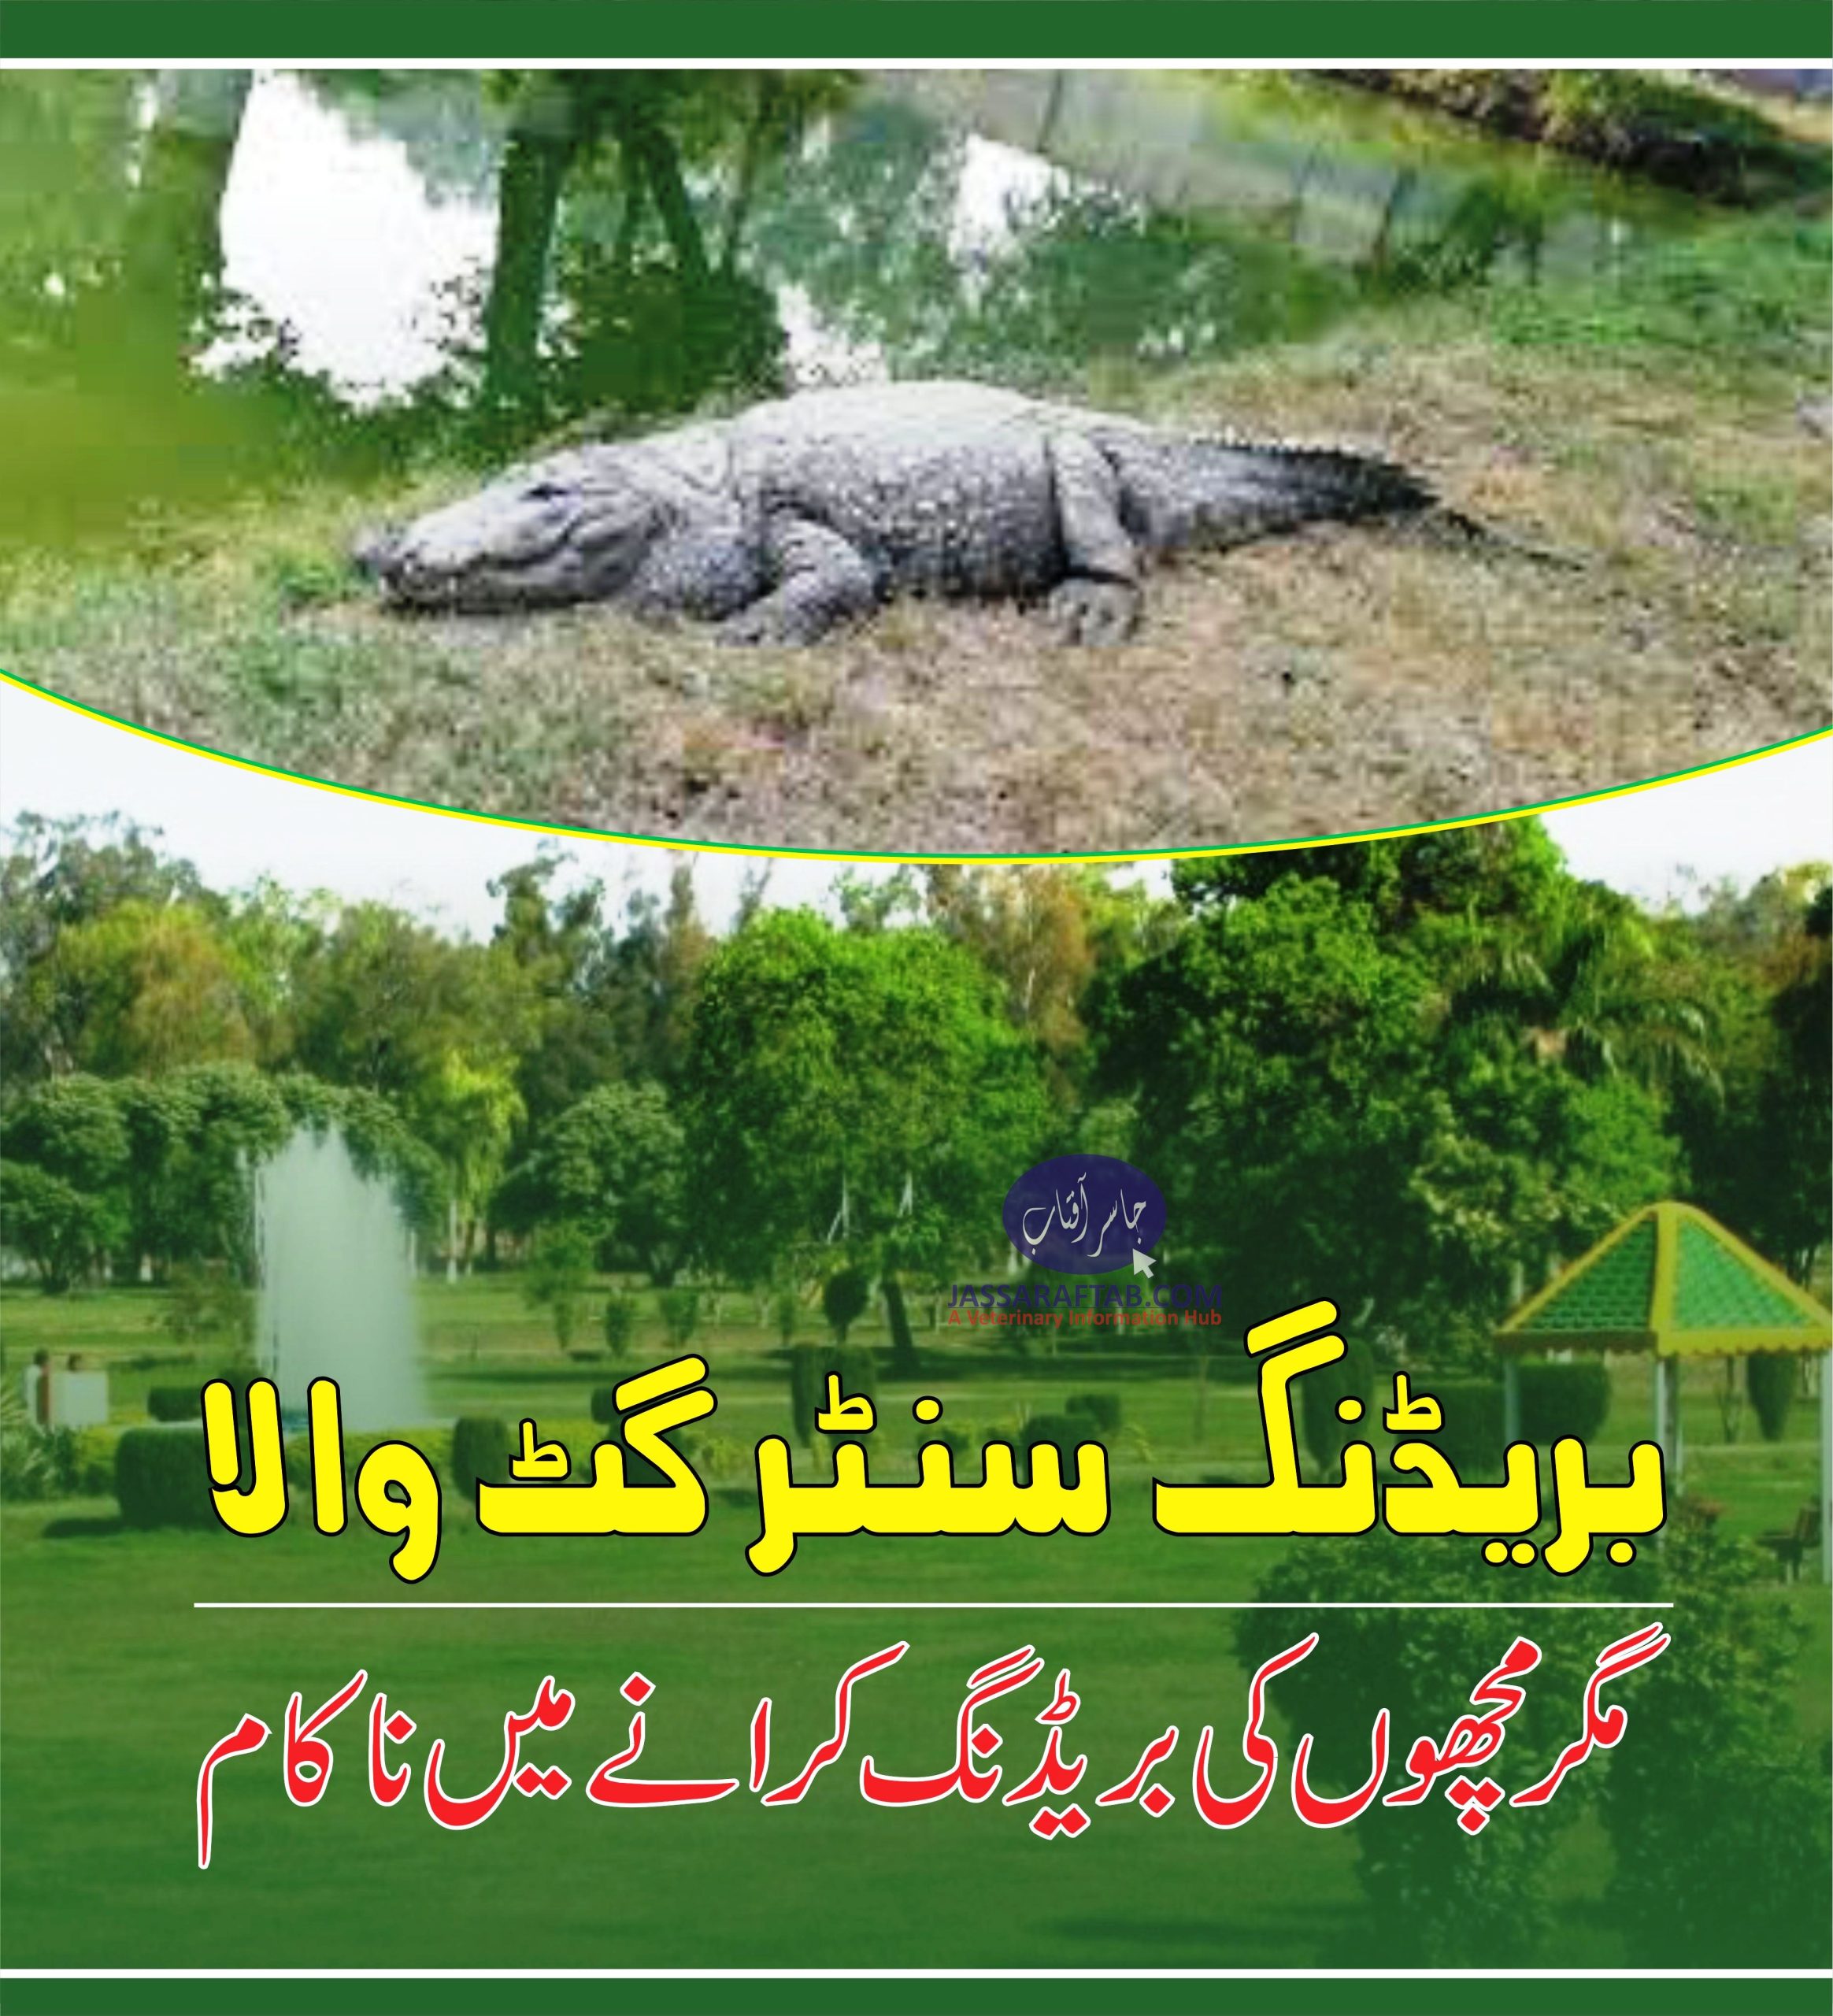 Gatwala wildlife center failed in crocodile breeding